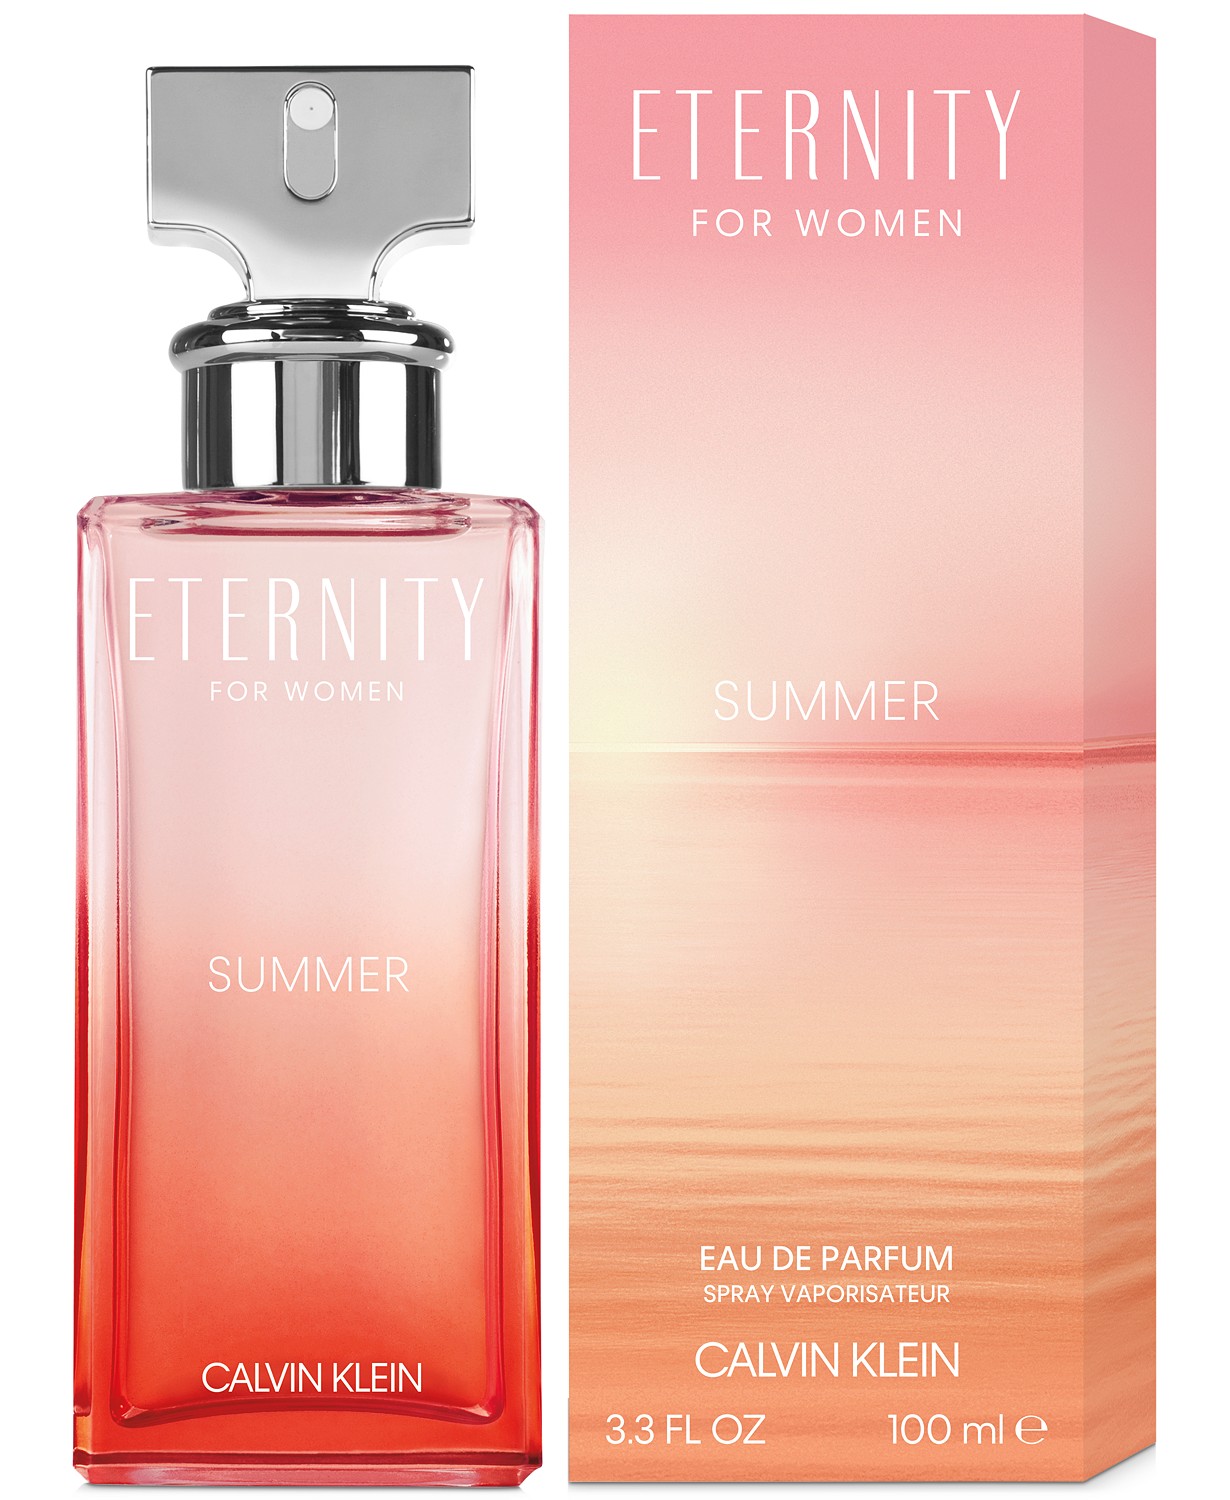 perfume calvin klein eternity summer